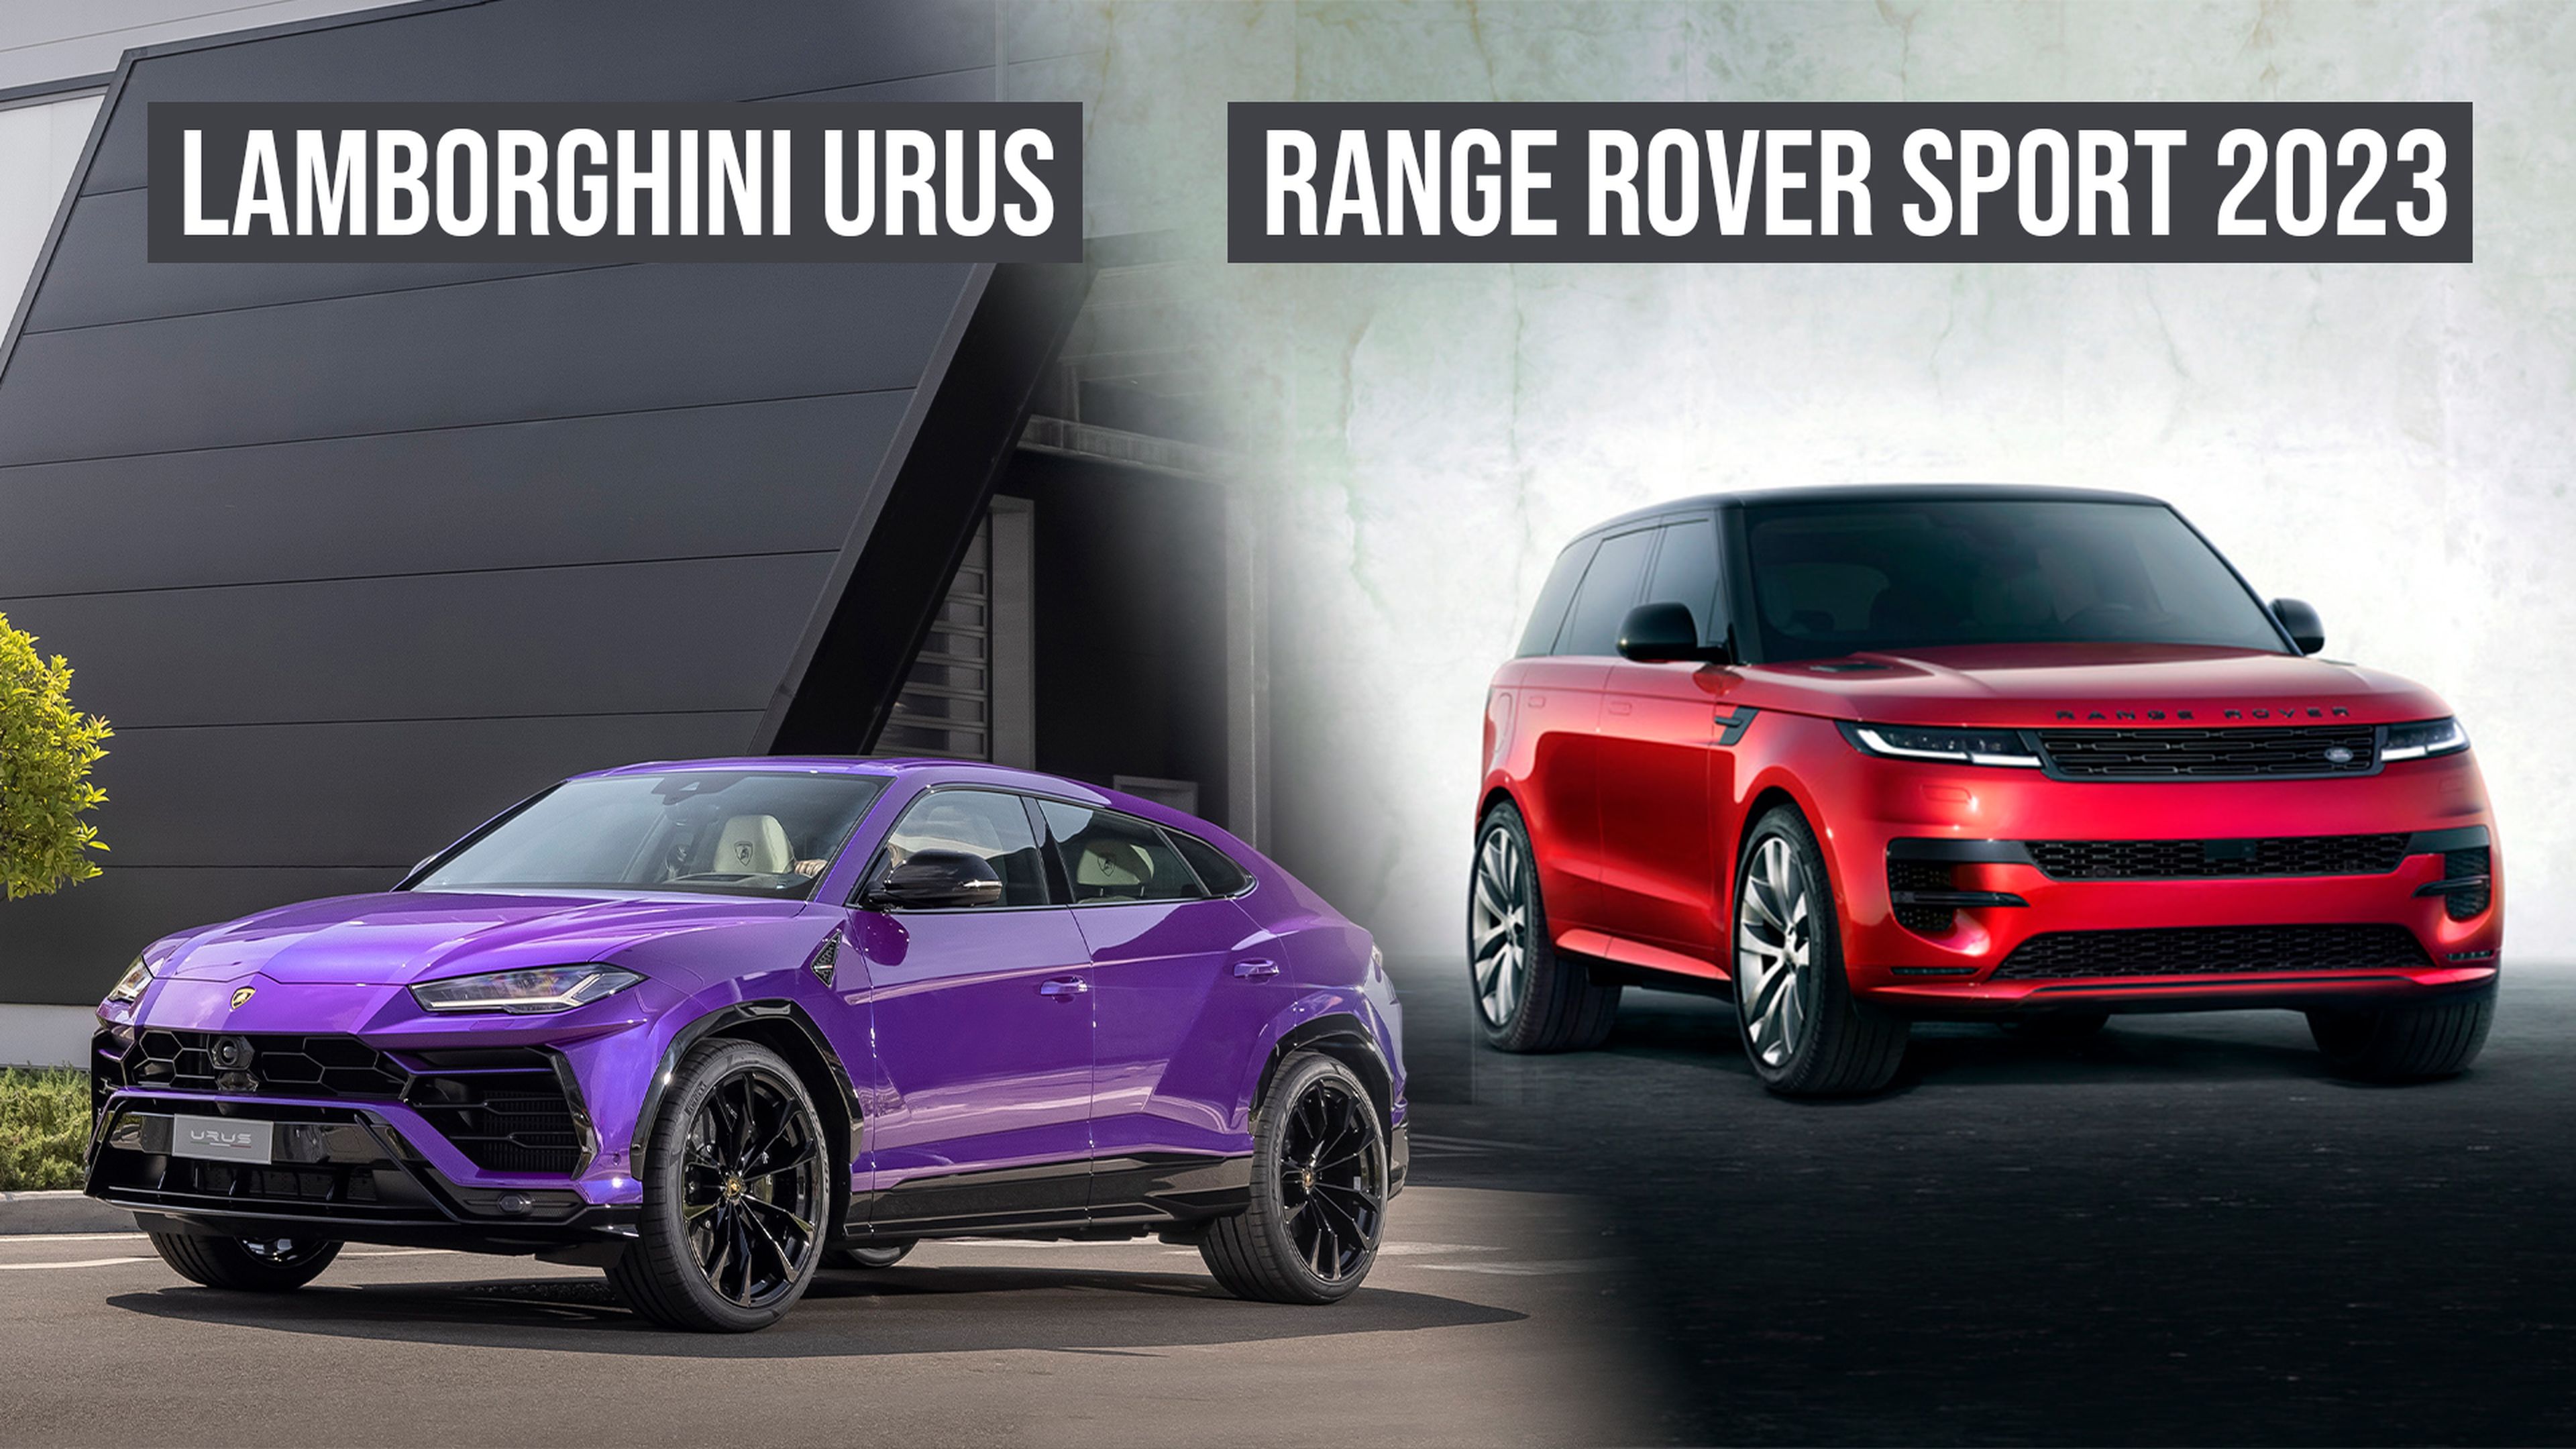 Lamborghini Urus vs Range Rover Sport 2023